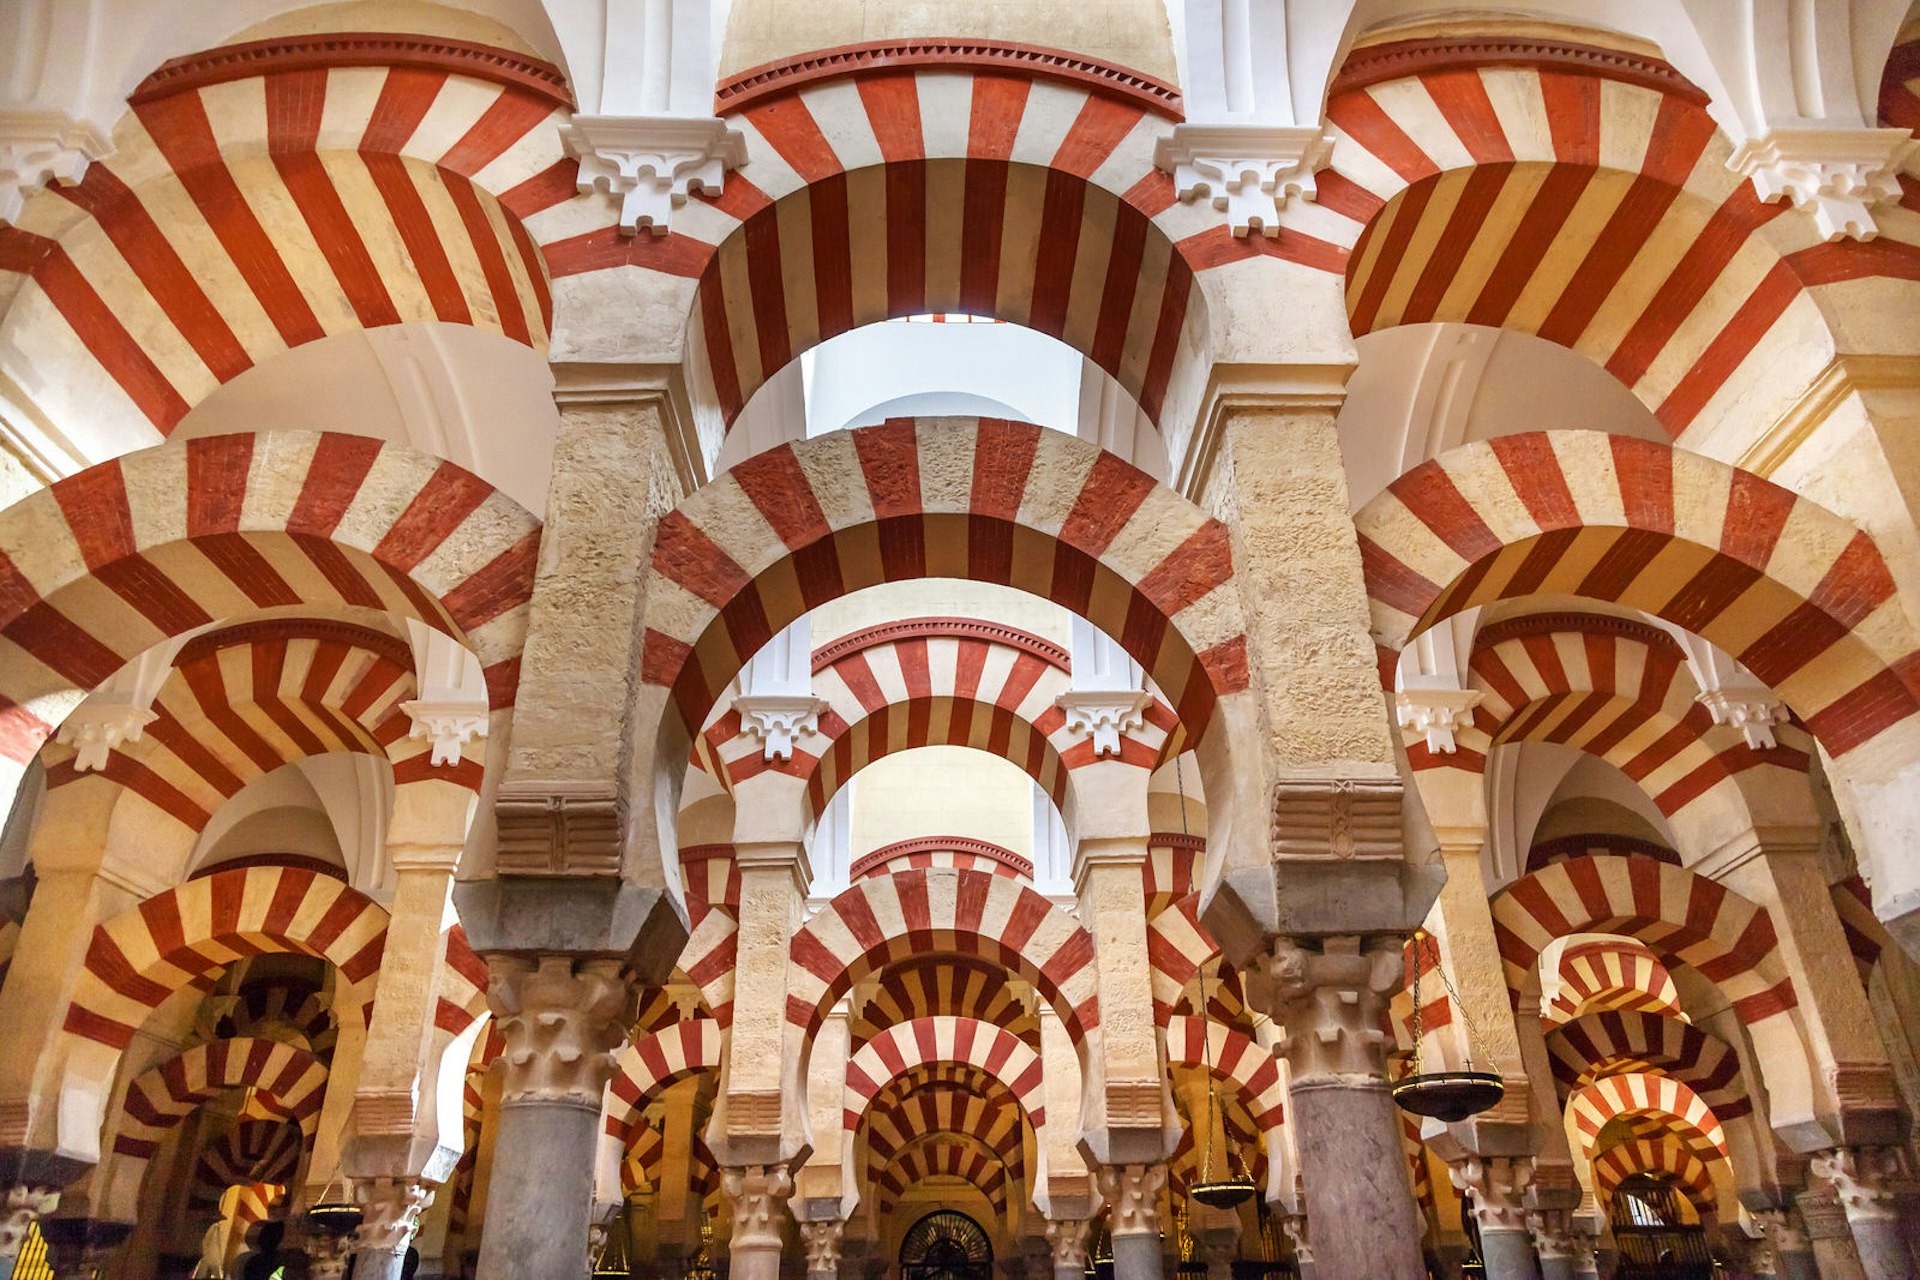 Mezquita, Cordoba, Spain © Bill Perry / Shutterstock 